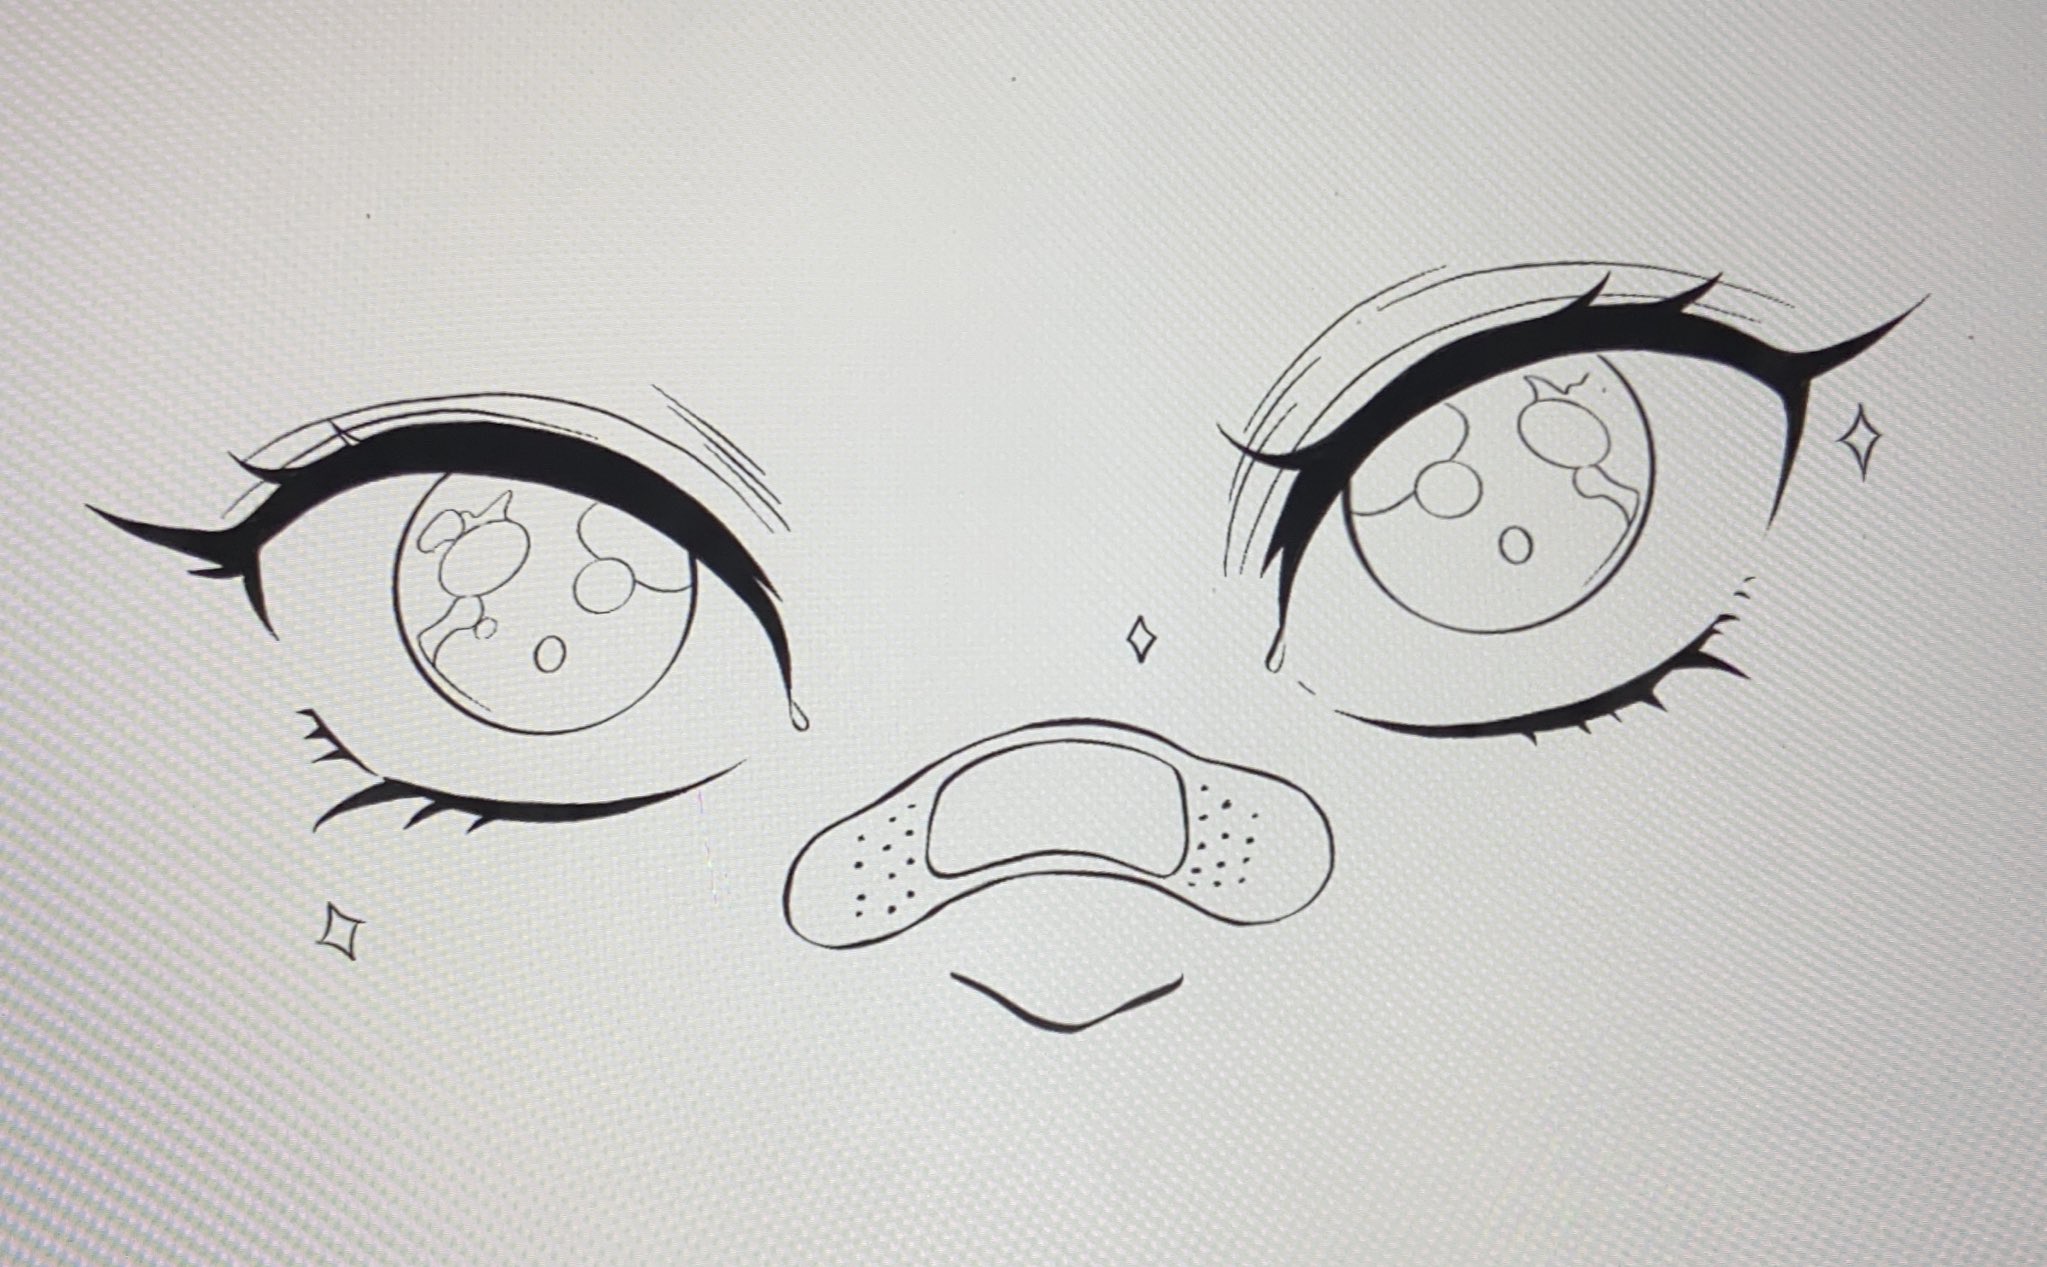 Kira on X: 👀 #anime #eyes #digitalart #illustration #drawing #drawingart  #Procreate #sketch #artistsupport  / X